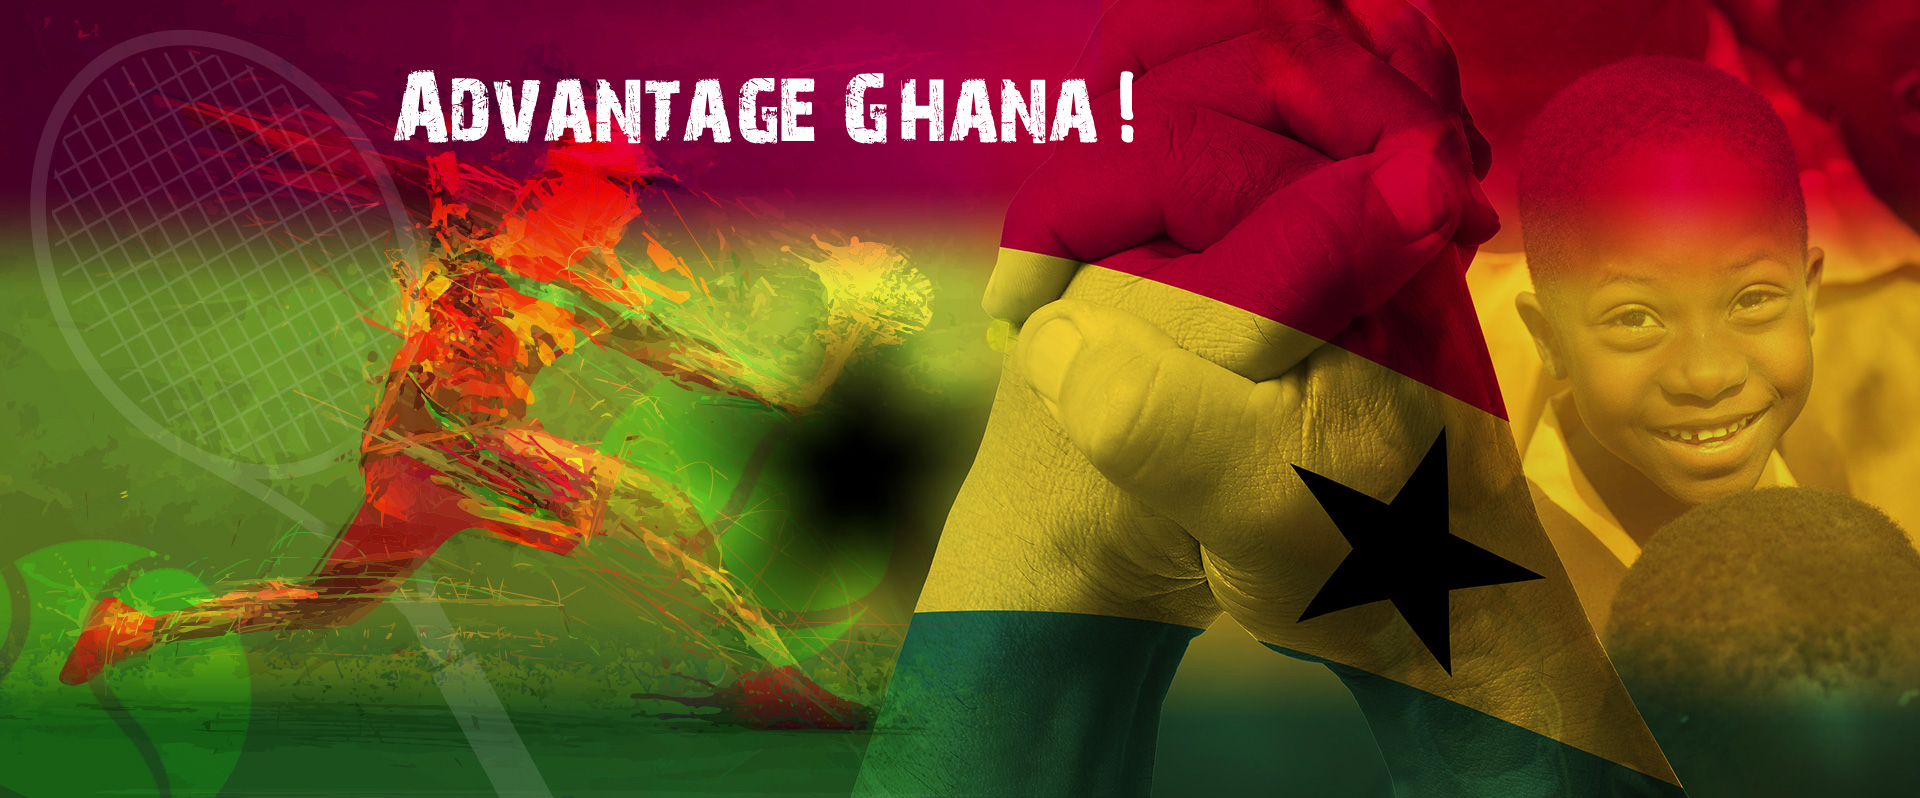 Advantage Ghana!